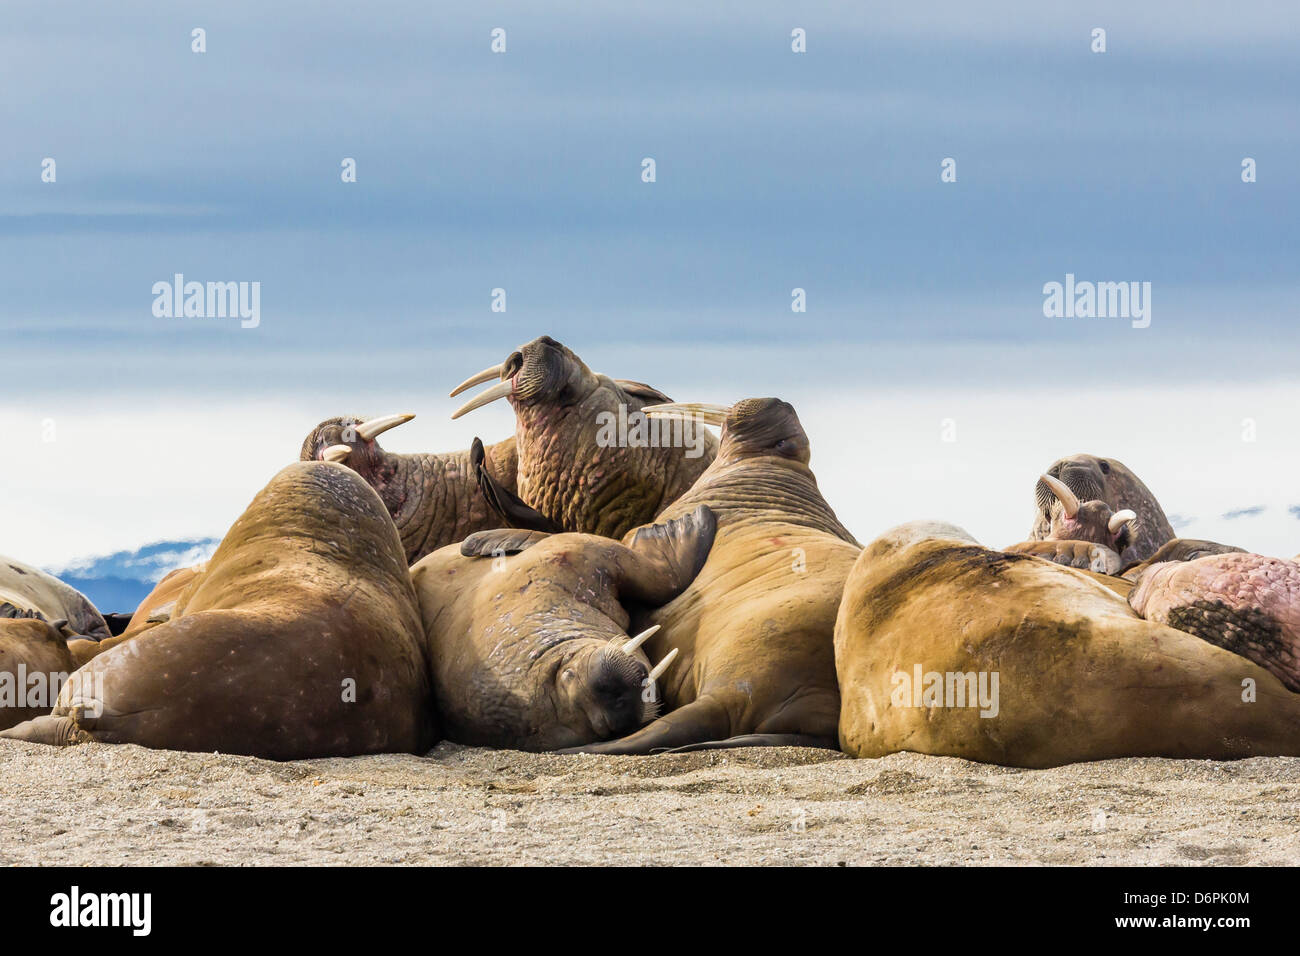 Adult walrus (Odobenus rosmarus rosmarus), Torrelneset, Nordauslandet Island, Svalbard Archipelago, Norway, Scandinavia, Europe Stock Photo